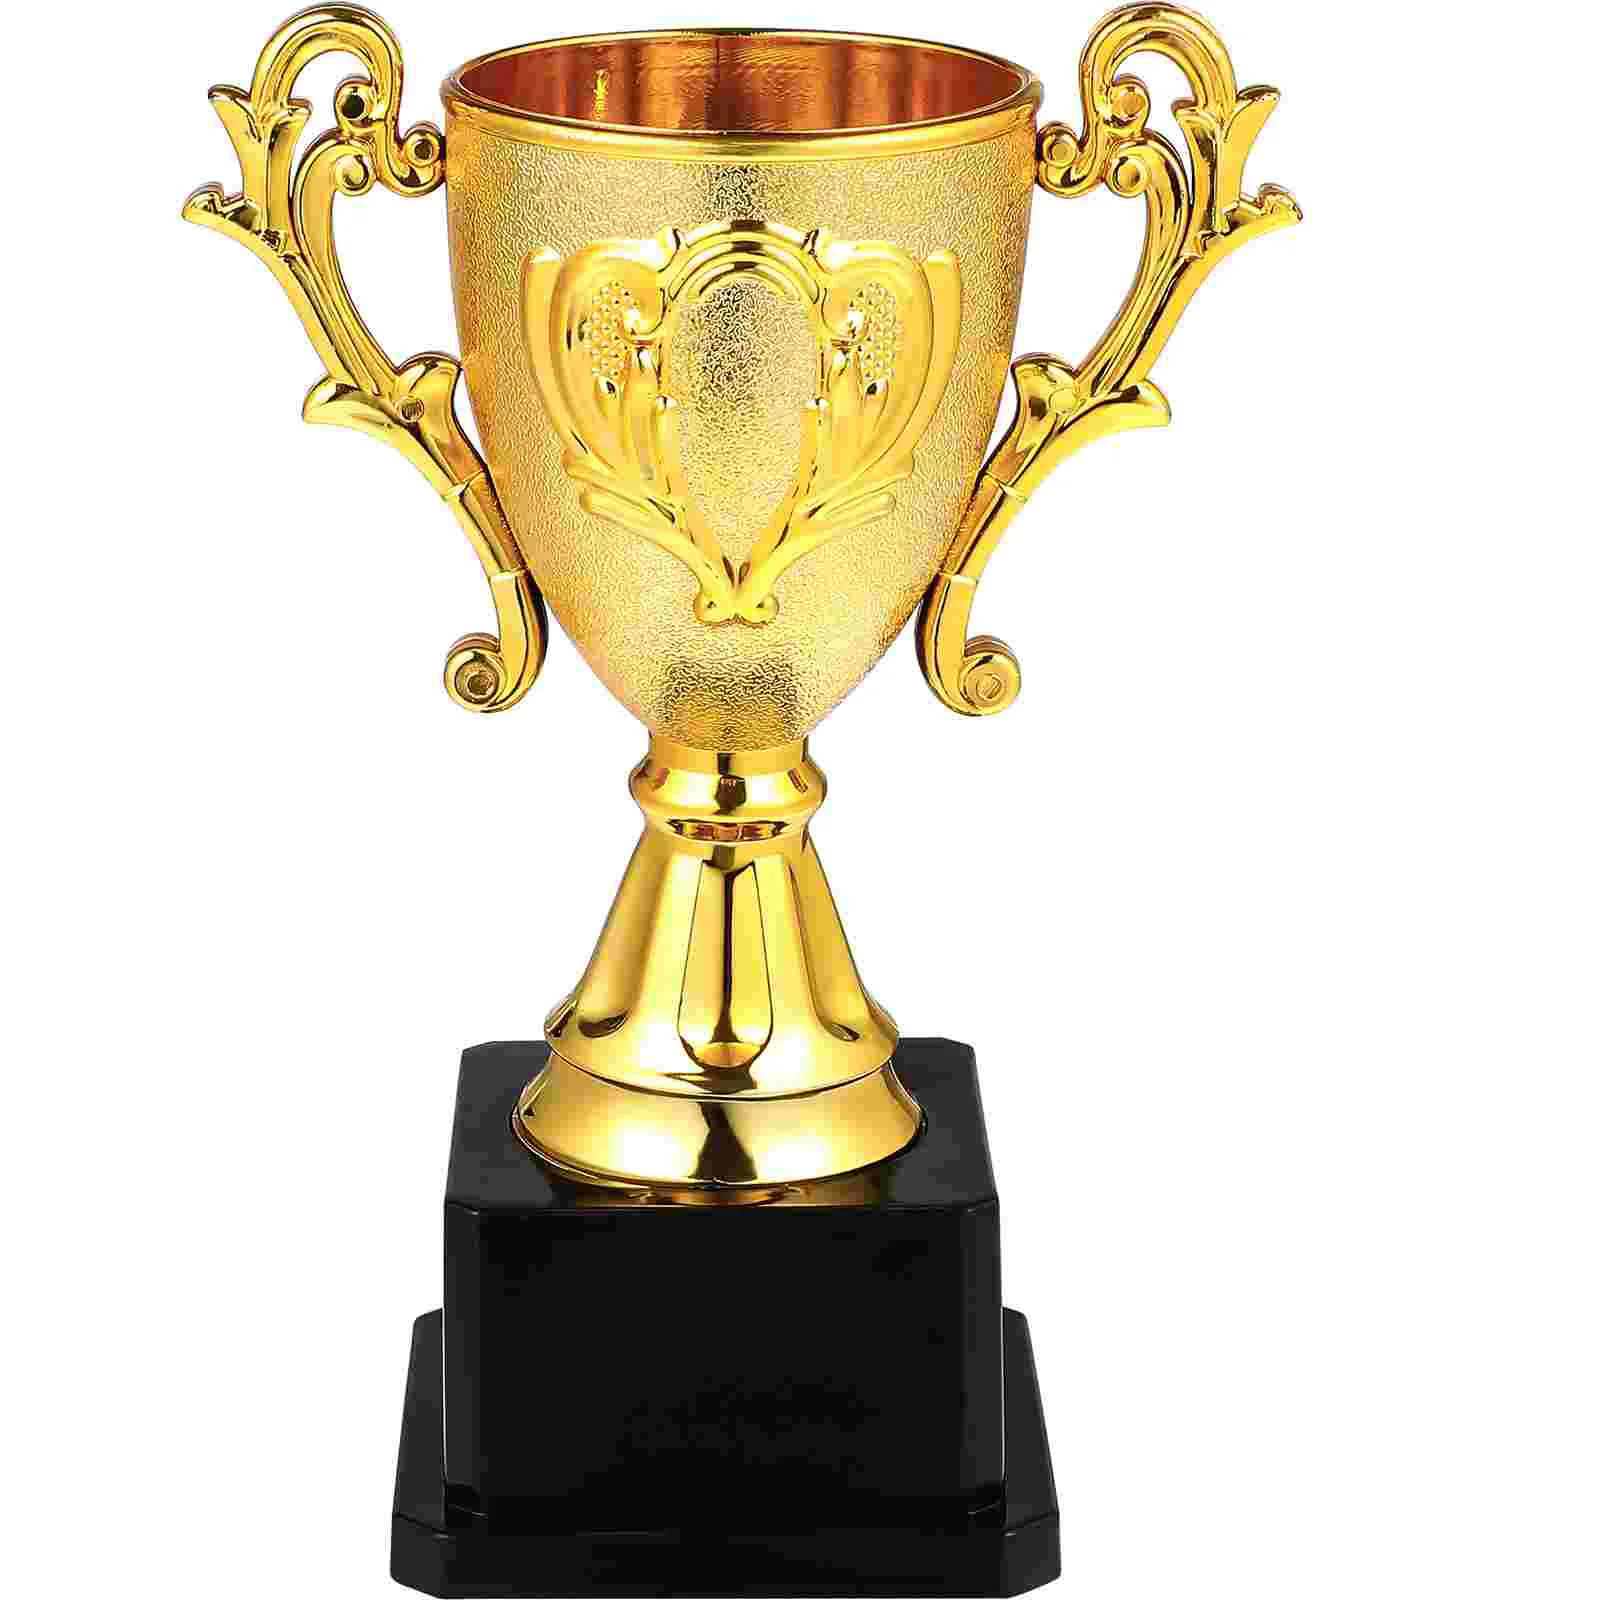 

Trophy Trophies Award Winner Plastic Kids Awards Gift Children Reward Toy Basketball League Participation Tournaments Games